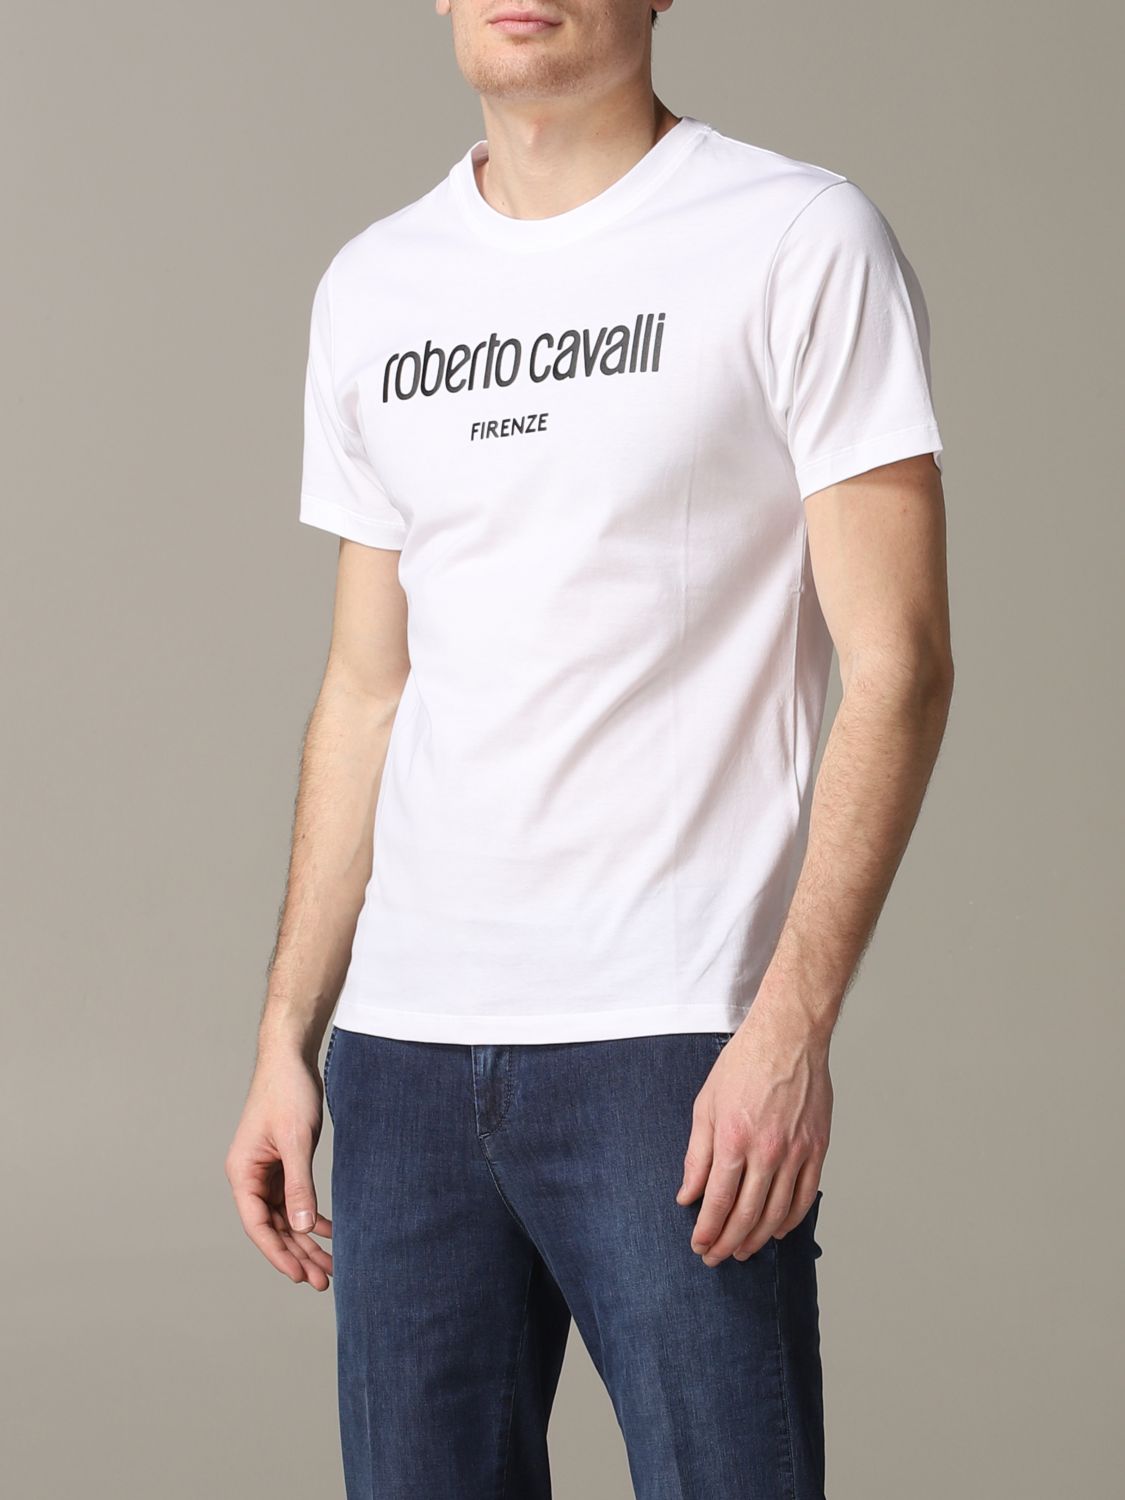 variabel Onderscheiden Het beste Roberto Cavalli Outlet: t-shirt for man - White | Roberto Cavalli t-shirt  JNT613 JD060 online on GIGLIO.COM